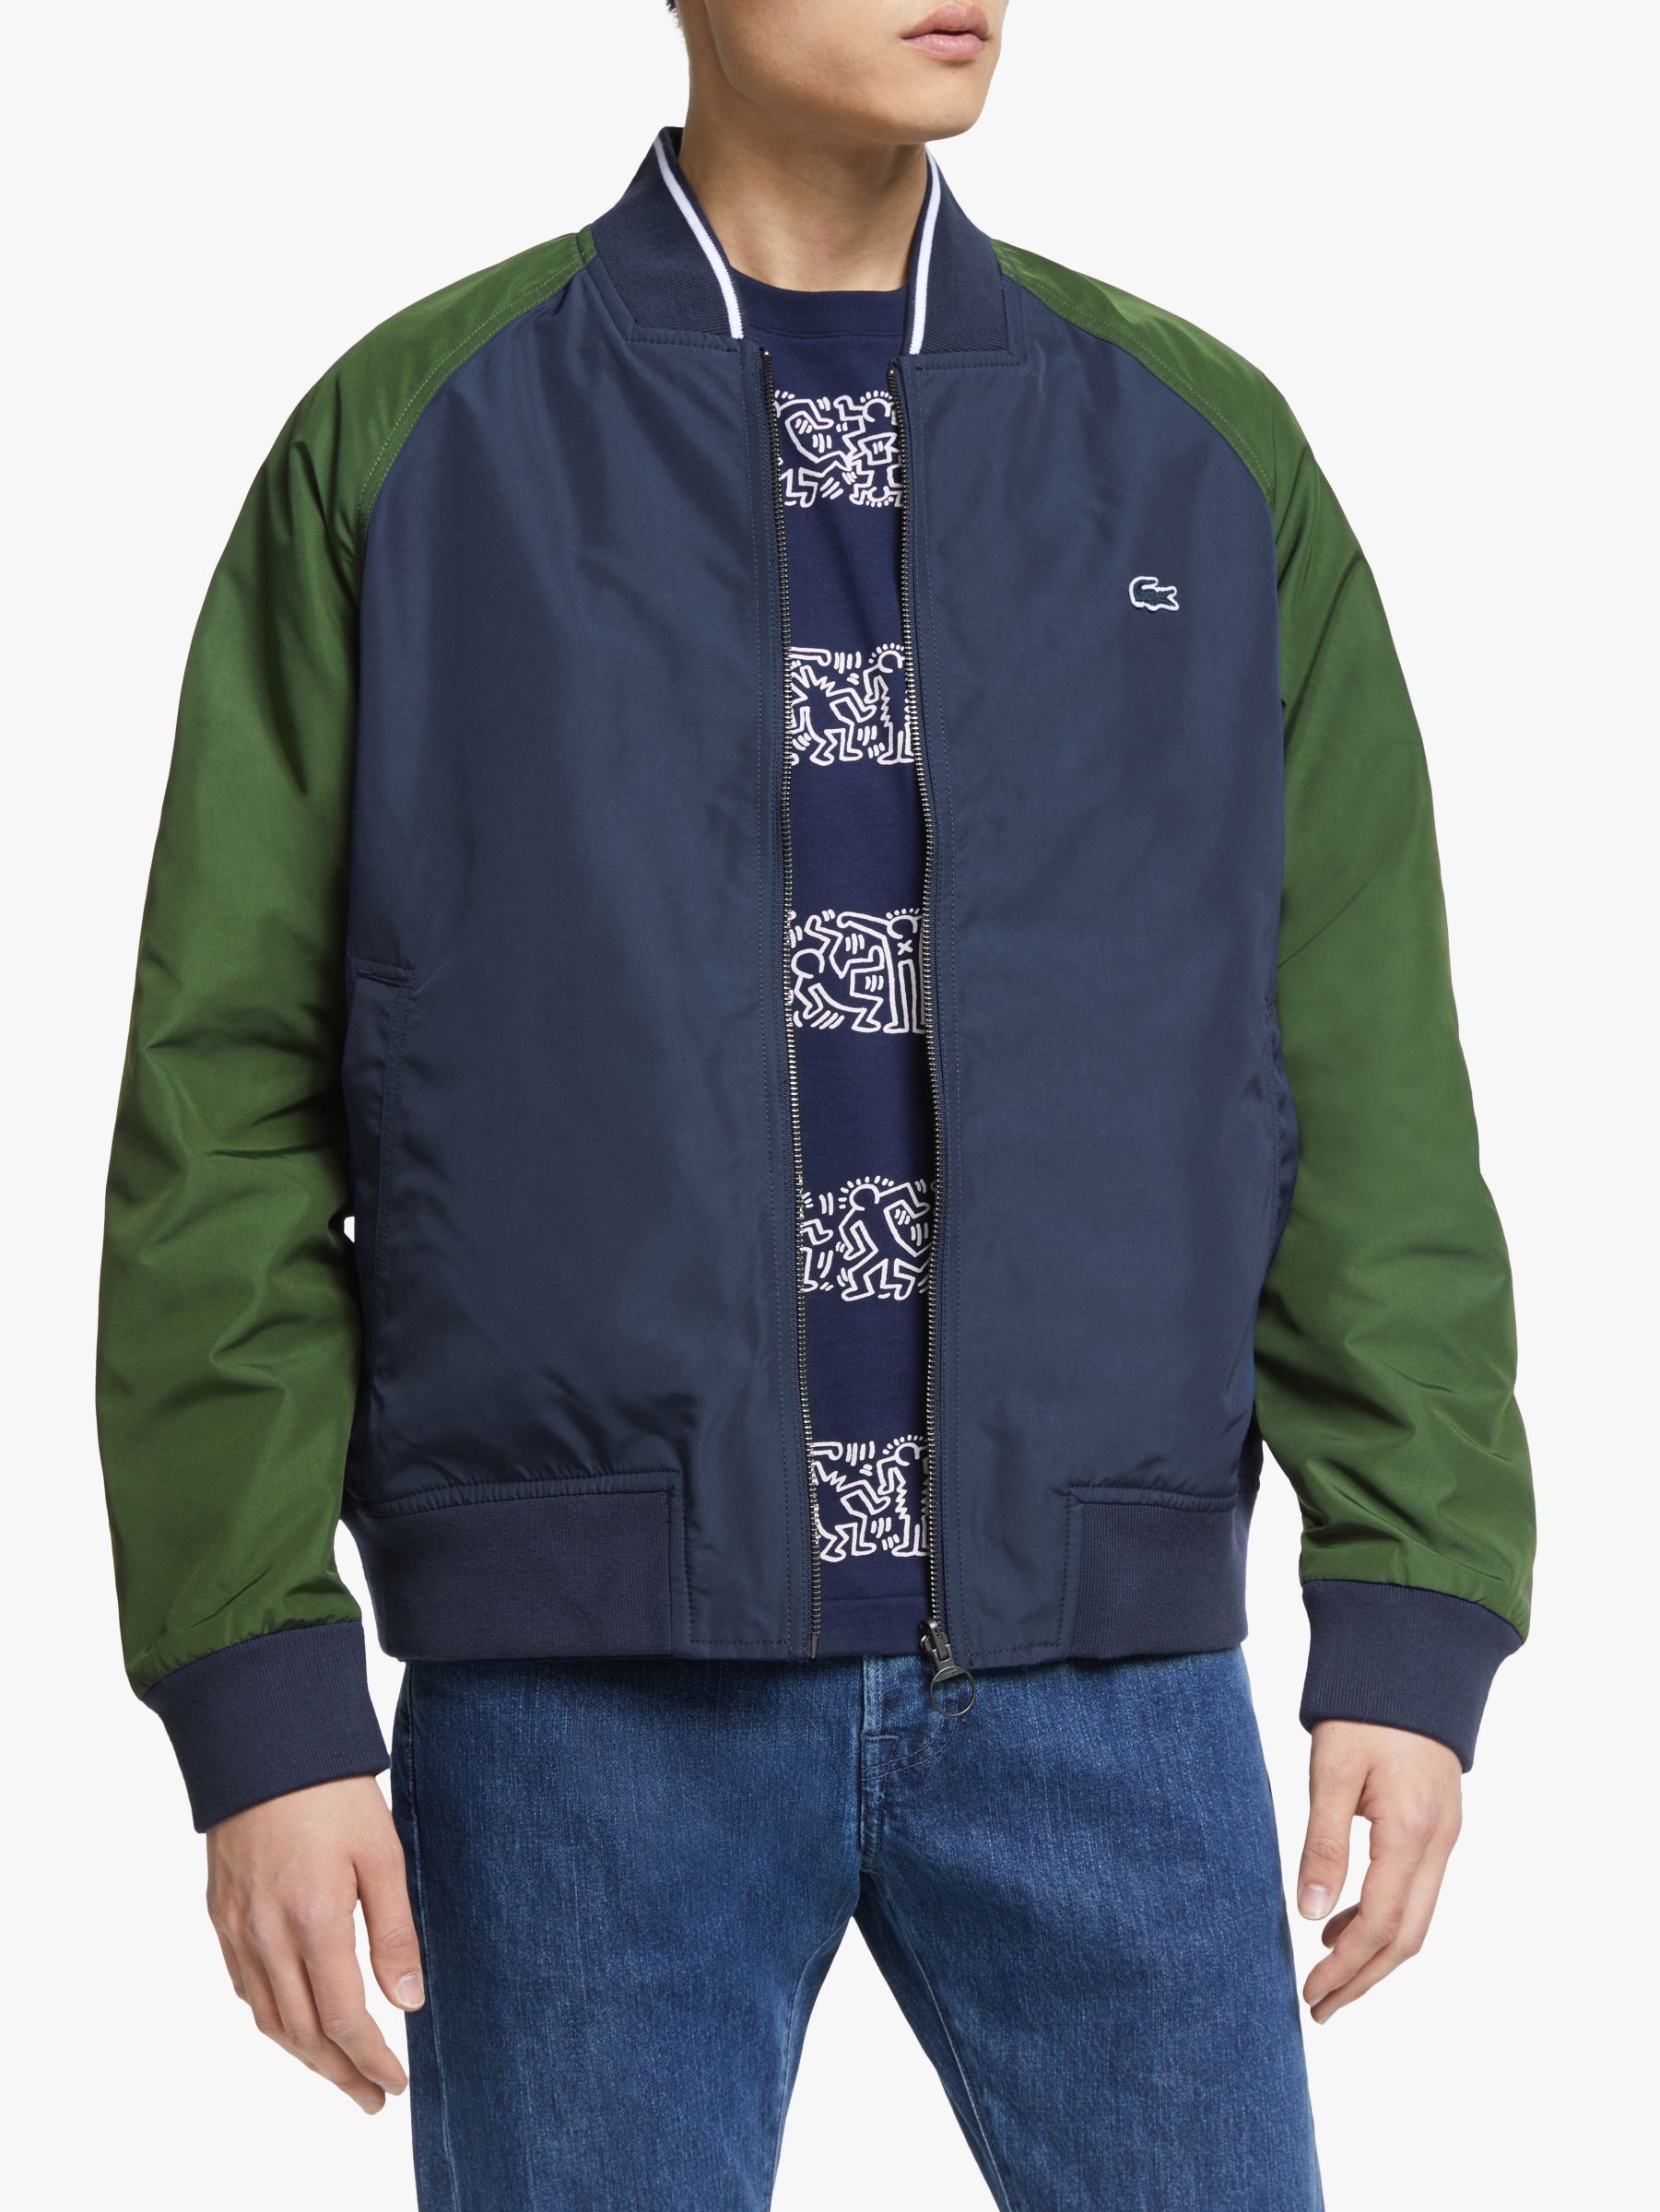 lacoste jacket navy blue